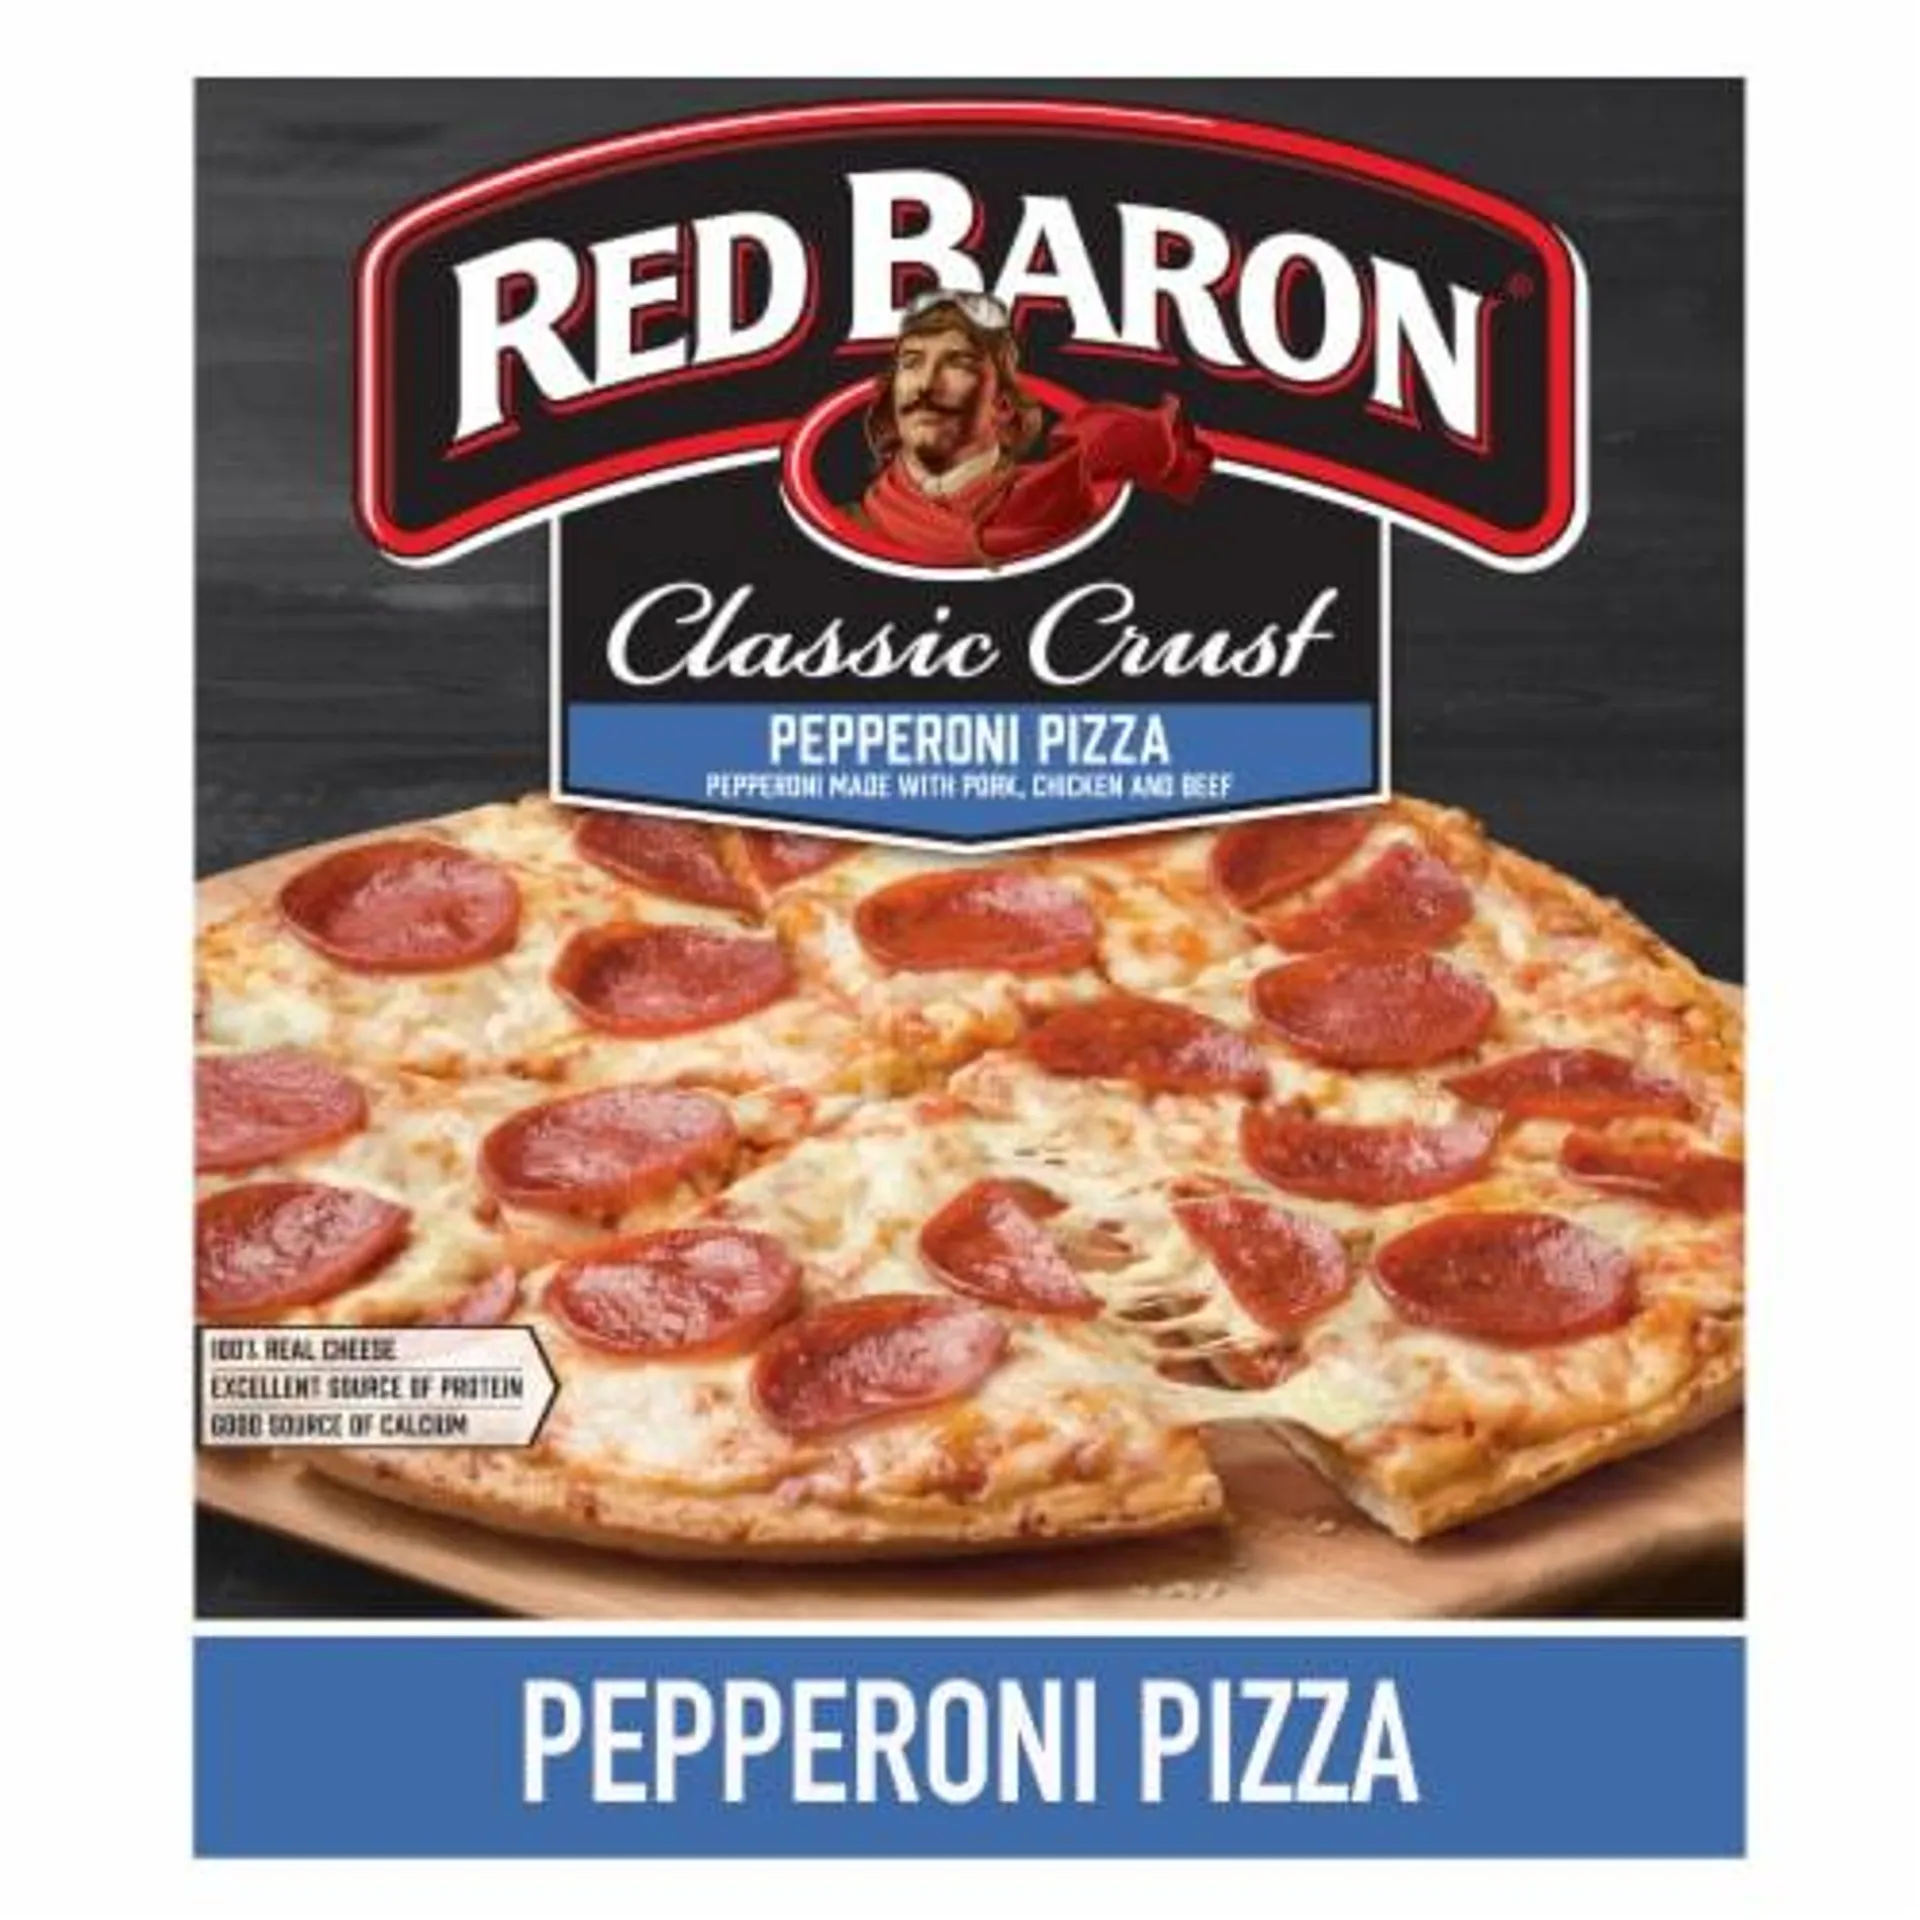 Red Baron Pepperoni Classic Crust Frozen Pizza